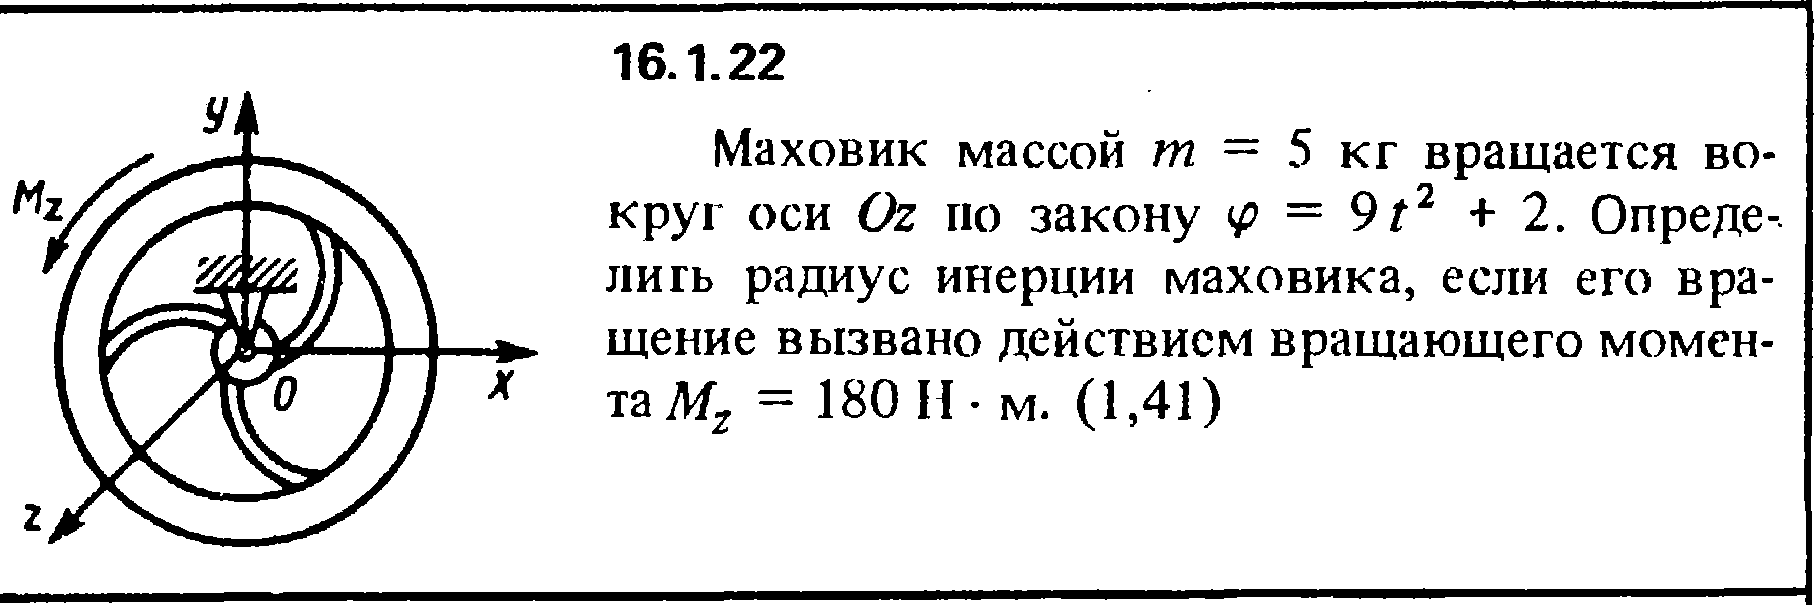 Решение задачи 16.1.22 из сборника Кепе О.Е. 1989 года